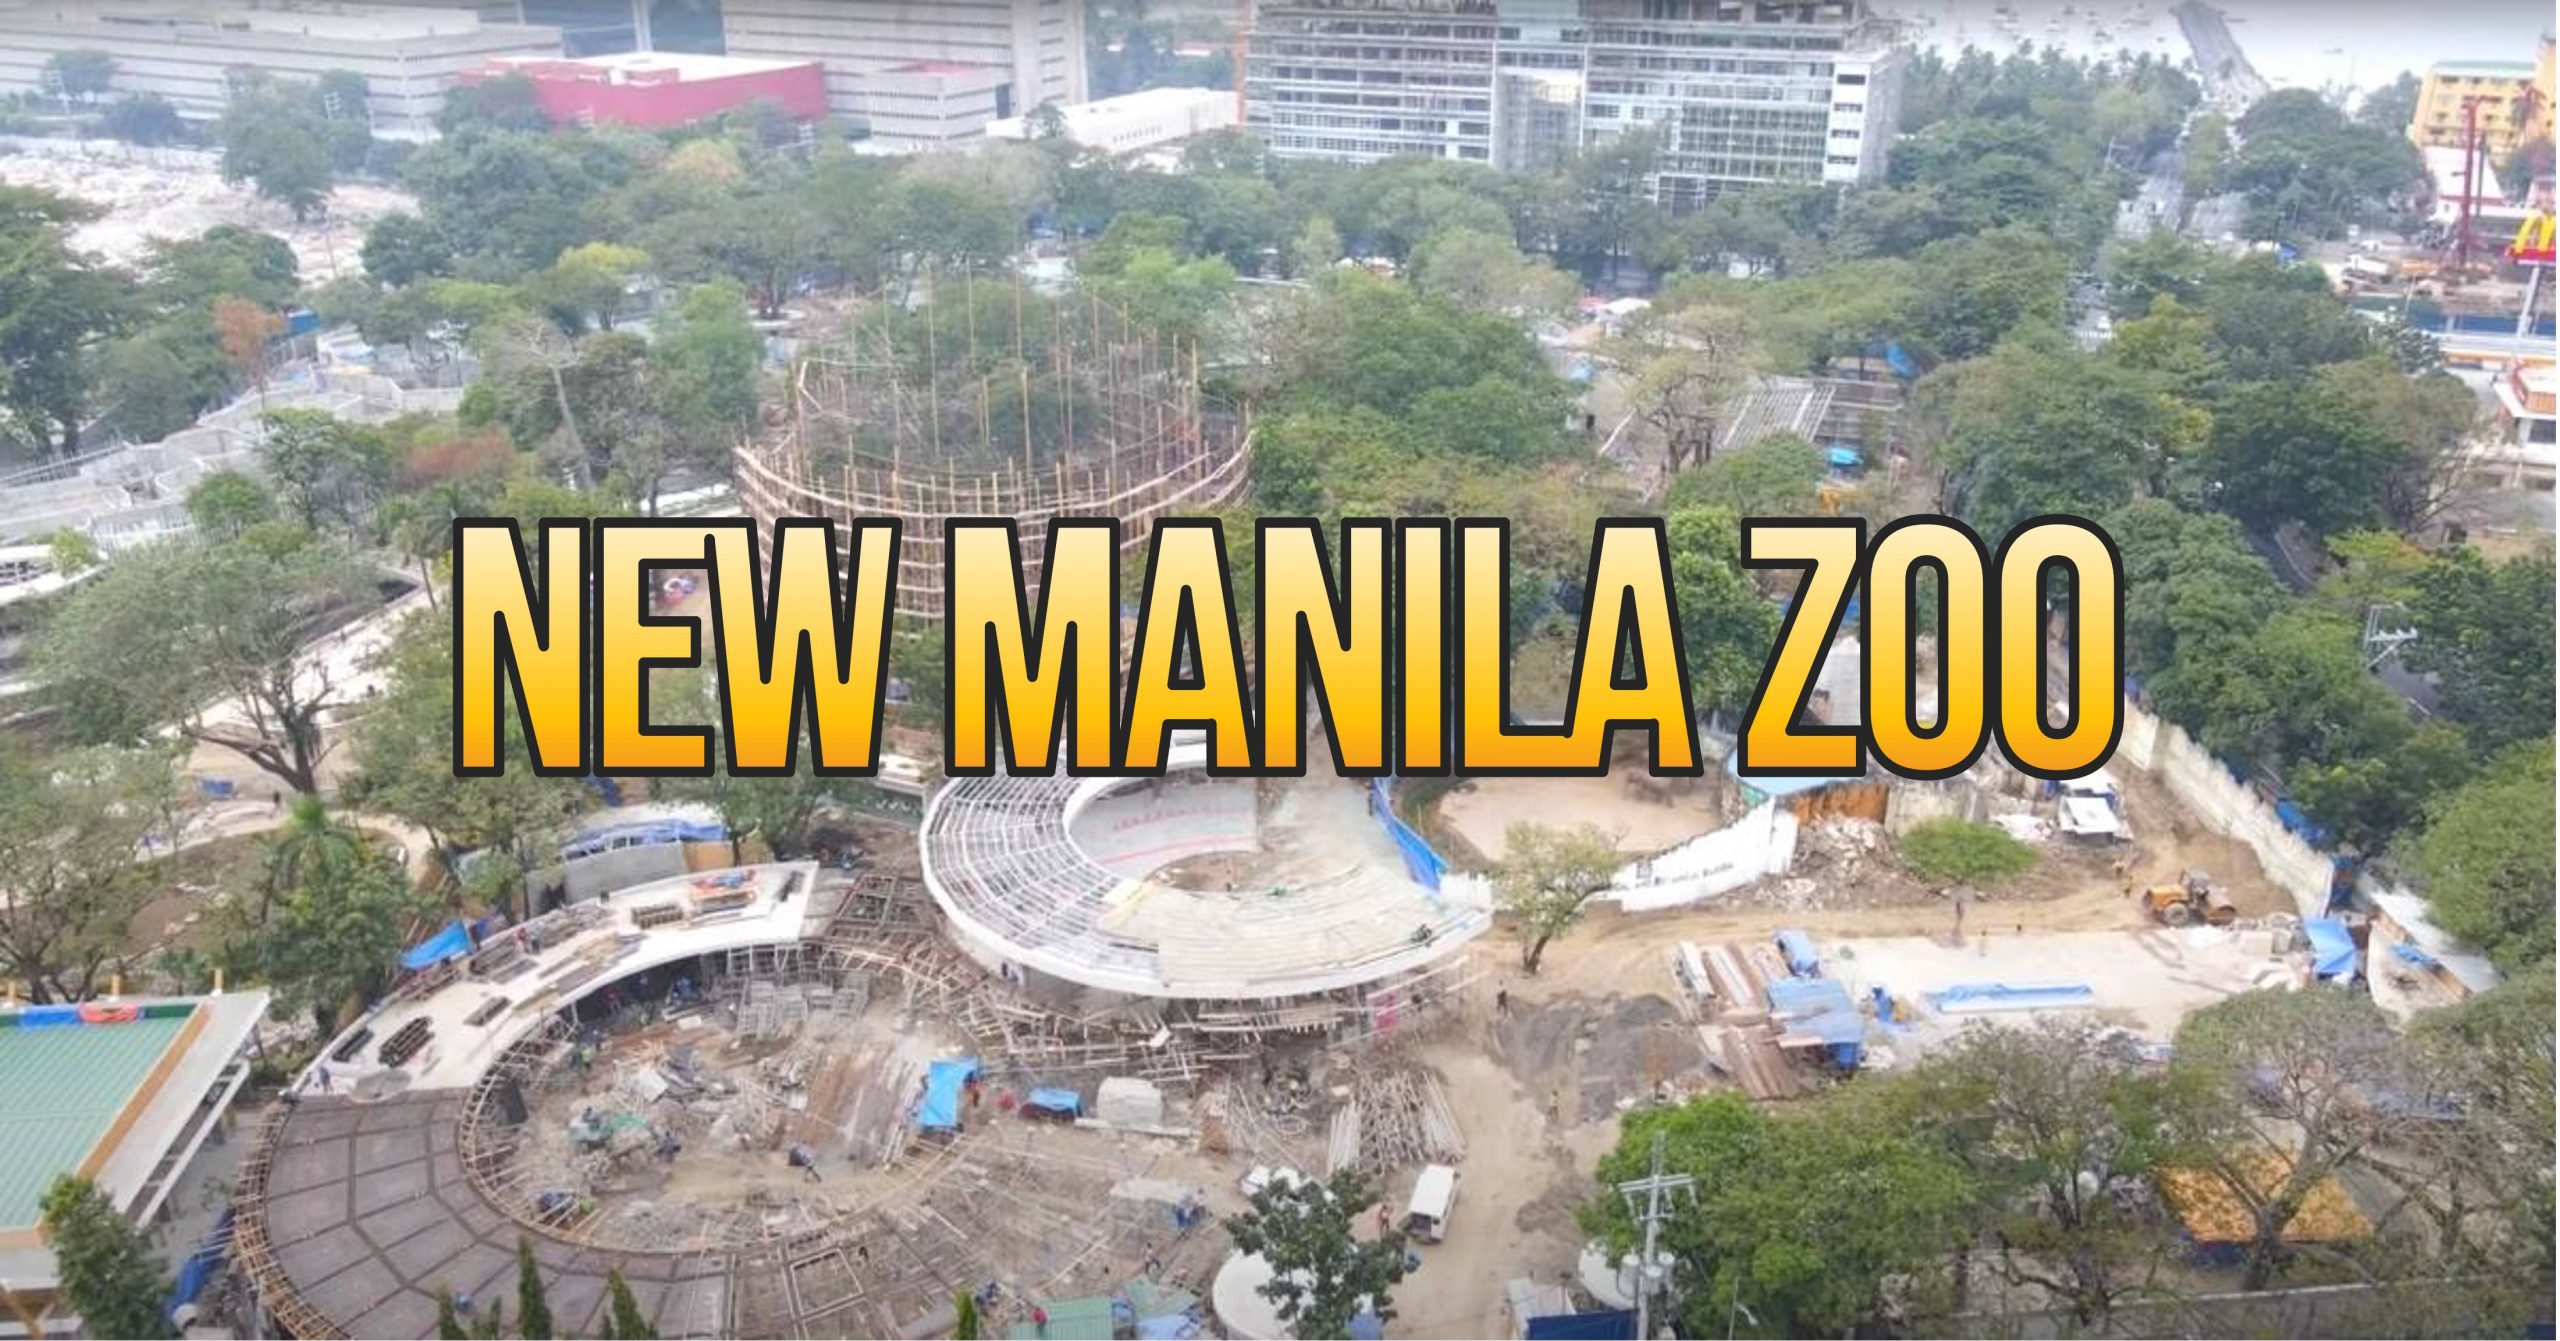 New Manila Zoo Progress Update as of November 2021